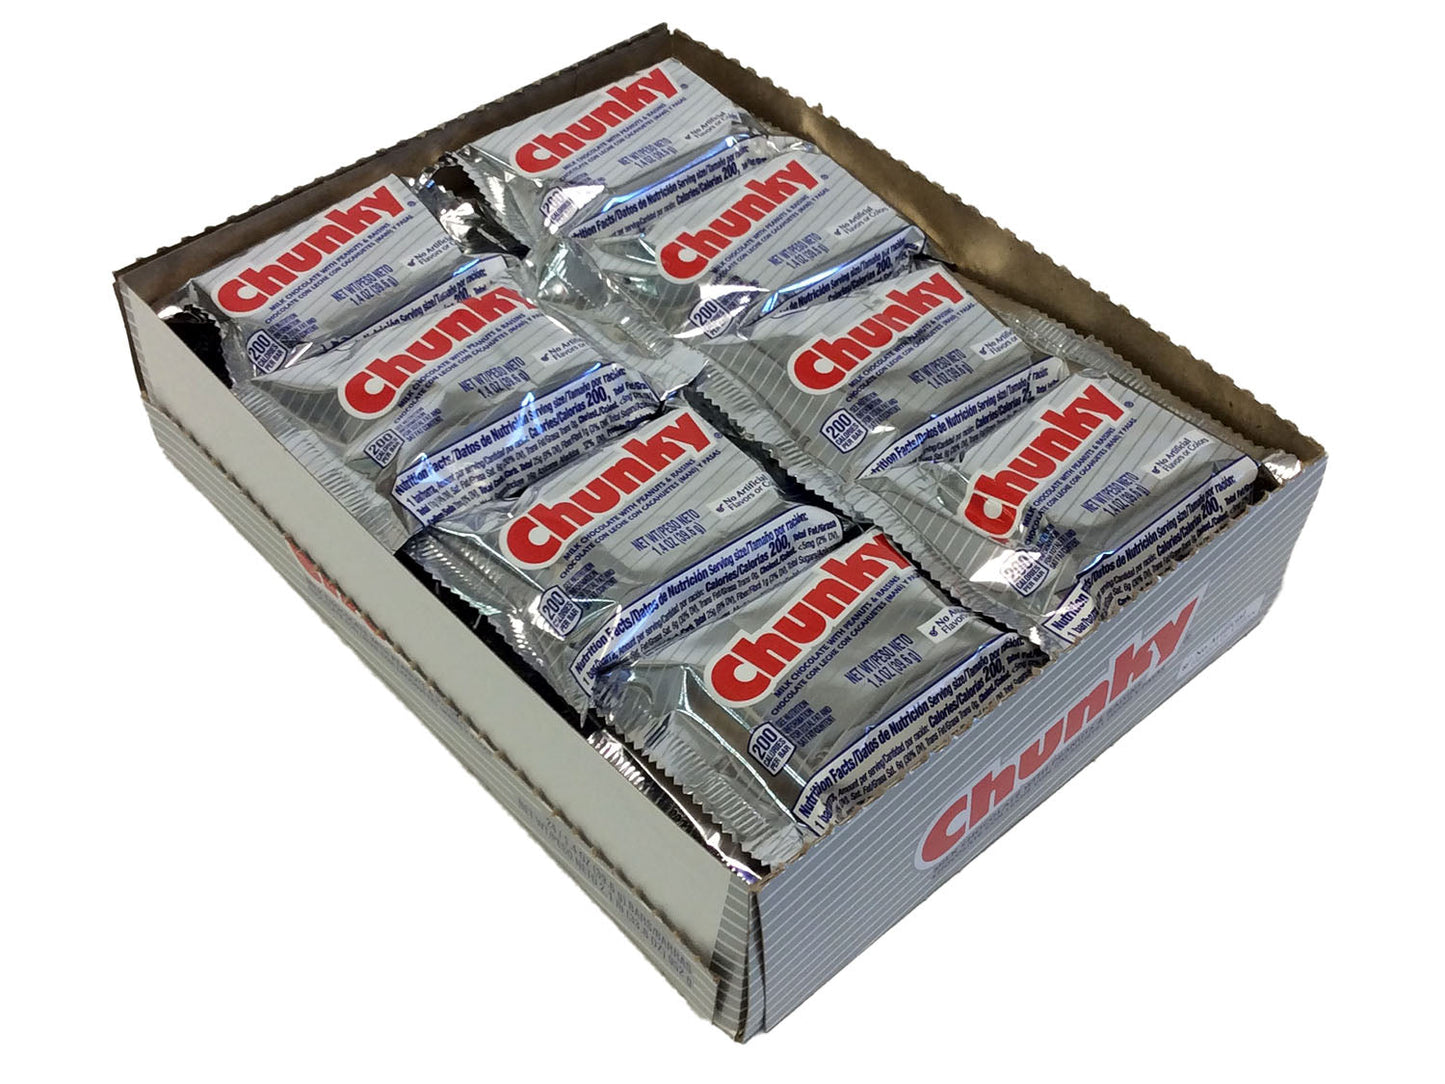 Chunky - 1.4 oz bar - box of 24 bars - opem